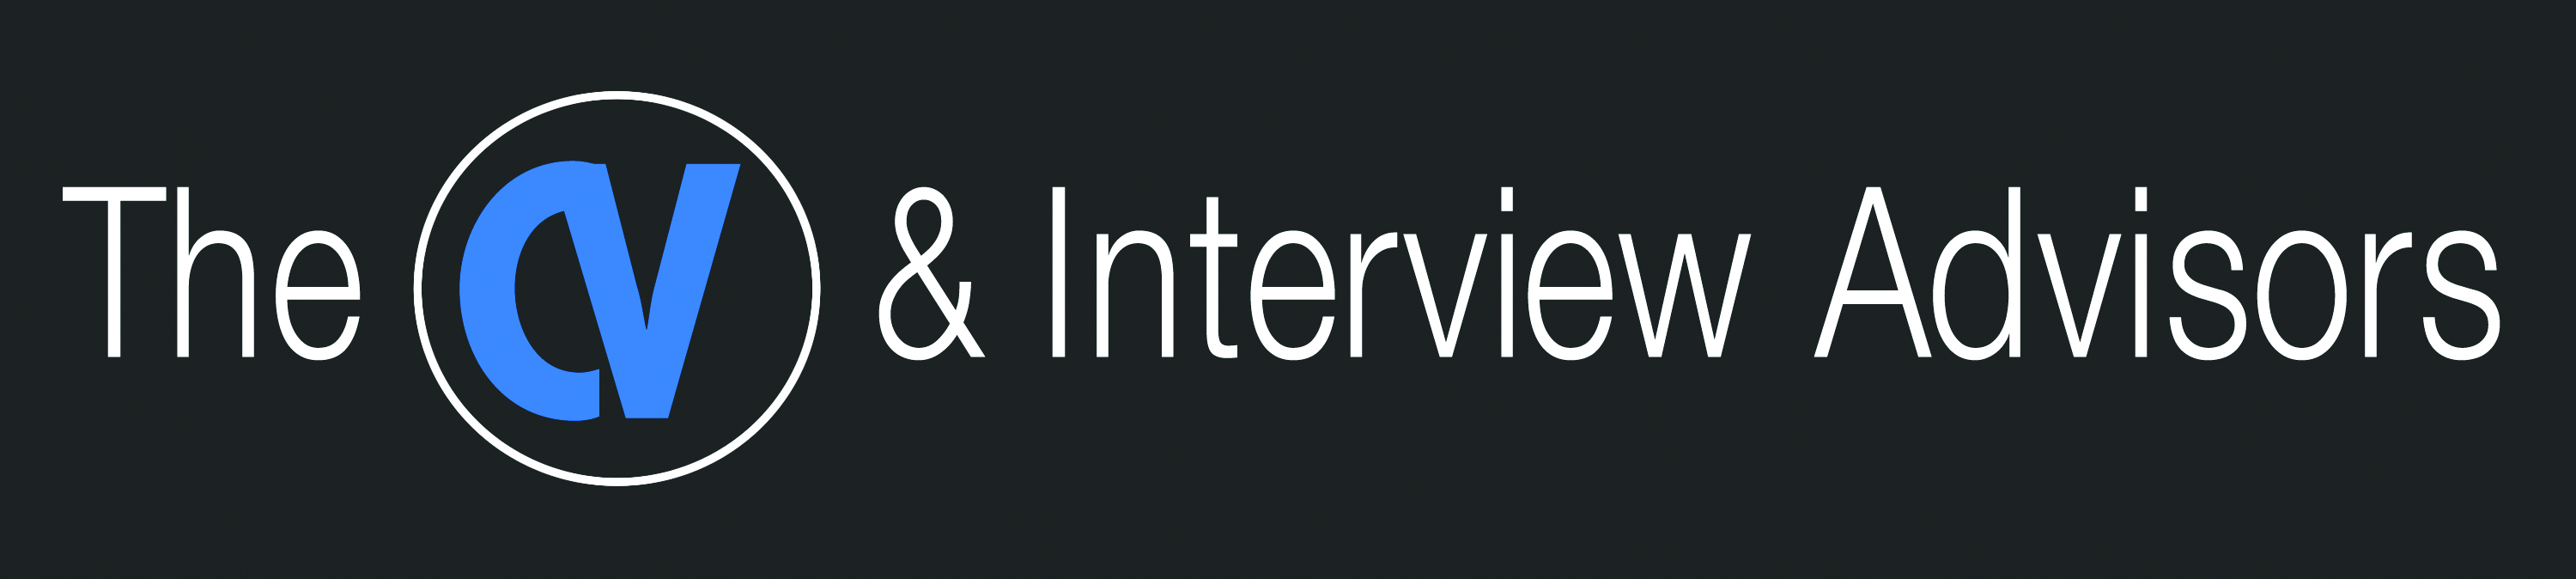 CV Interview and Advisors Logo